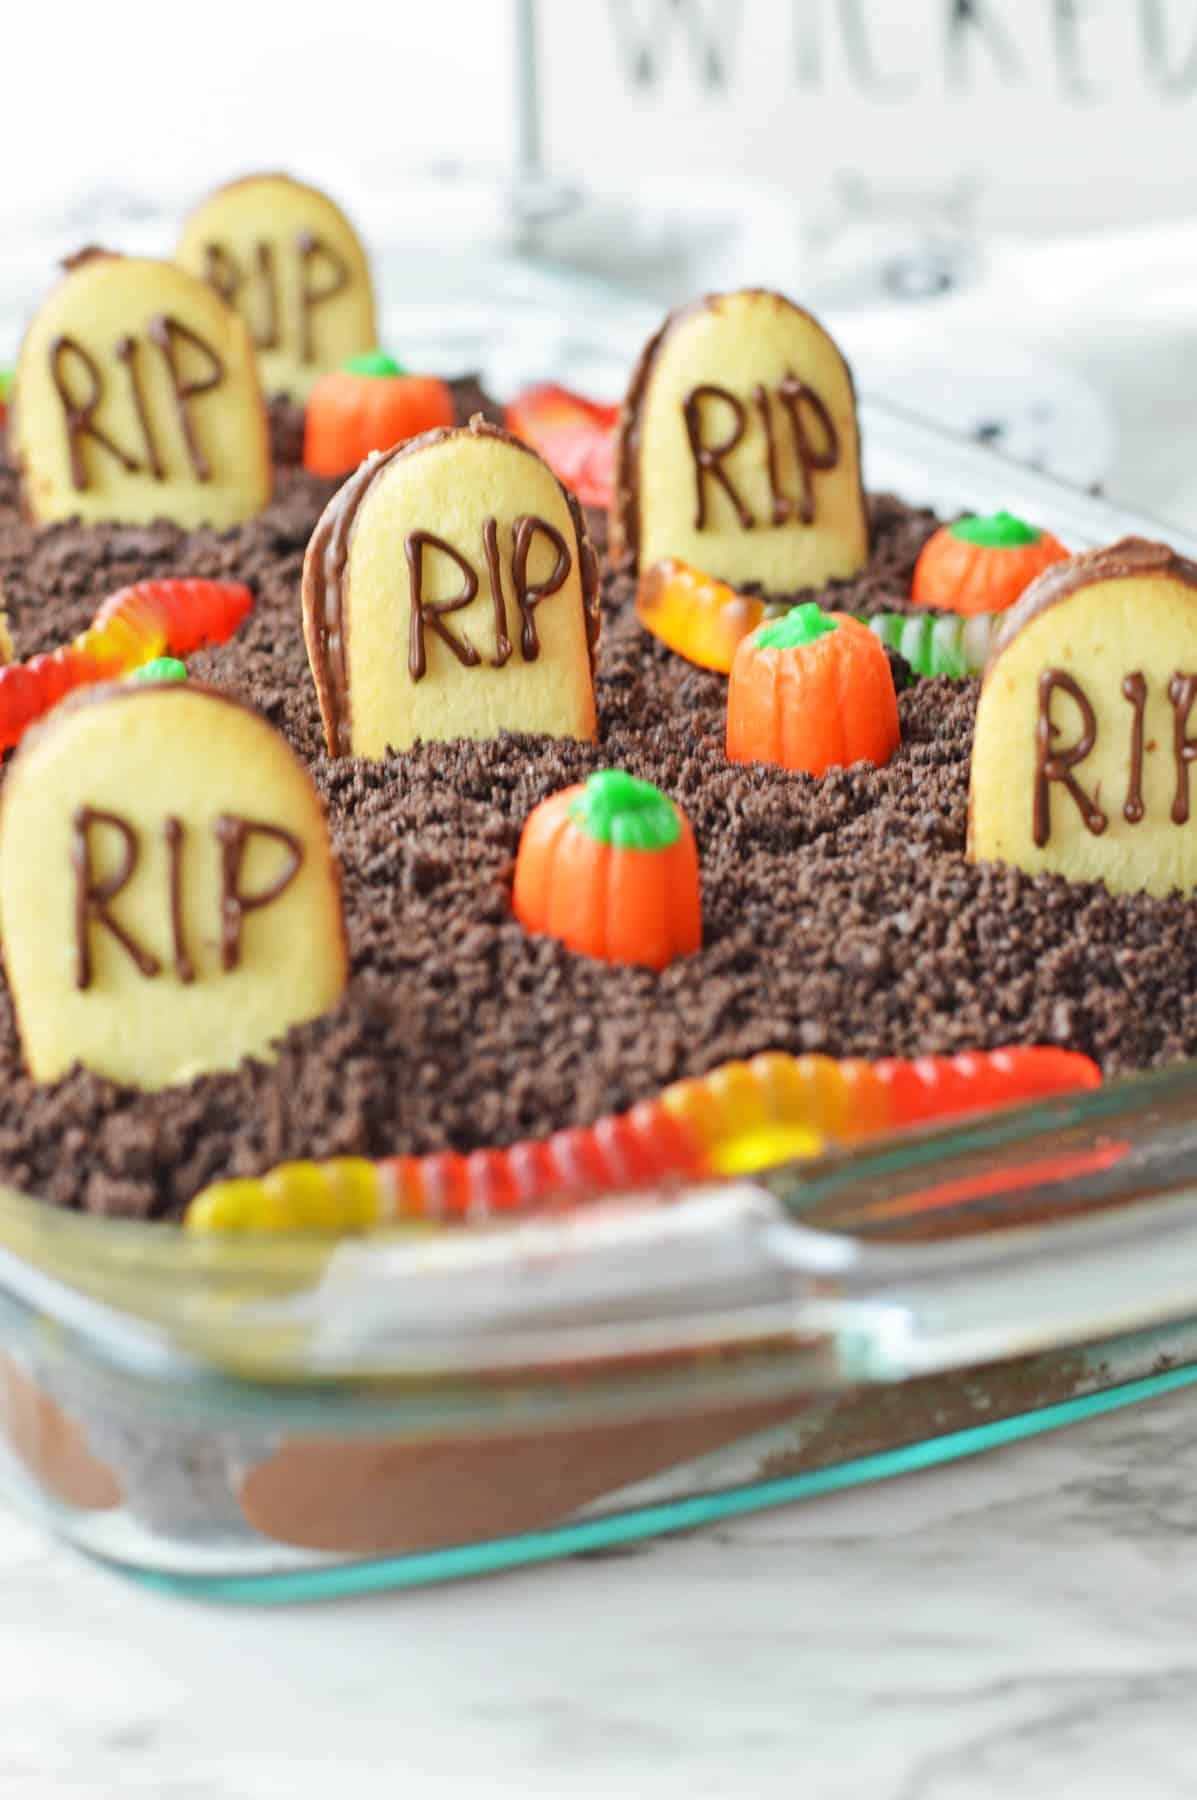 A halloween graveyard cake in a glass dish.